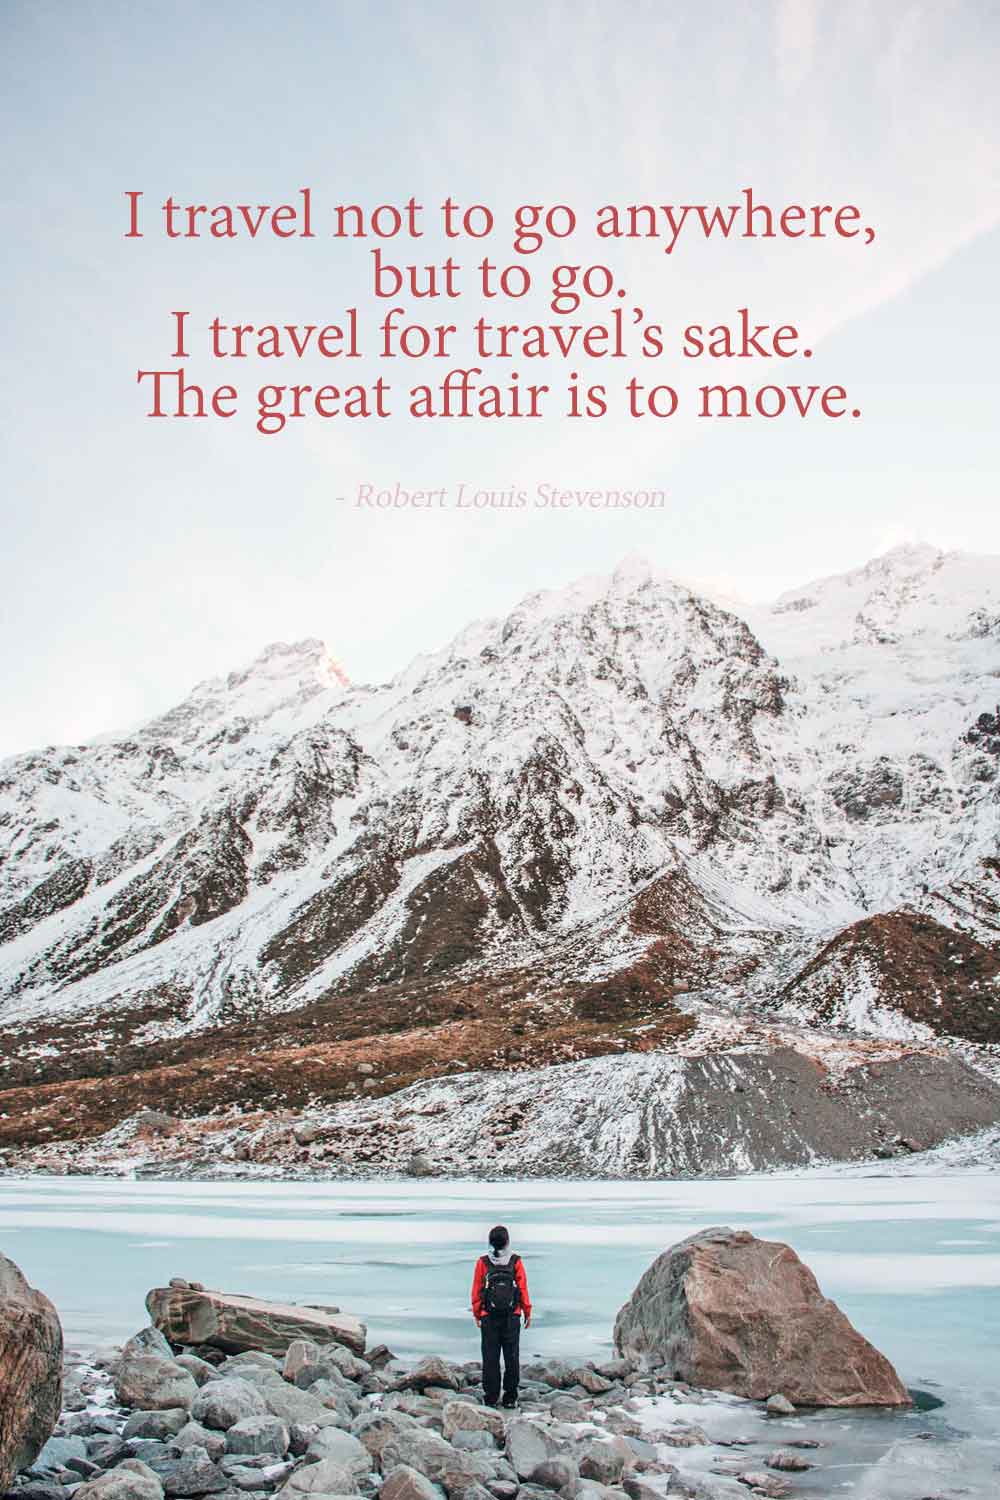 Robert Louis Stevenson Quote on Travel